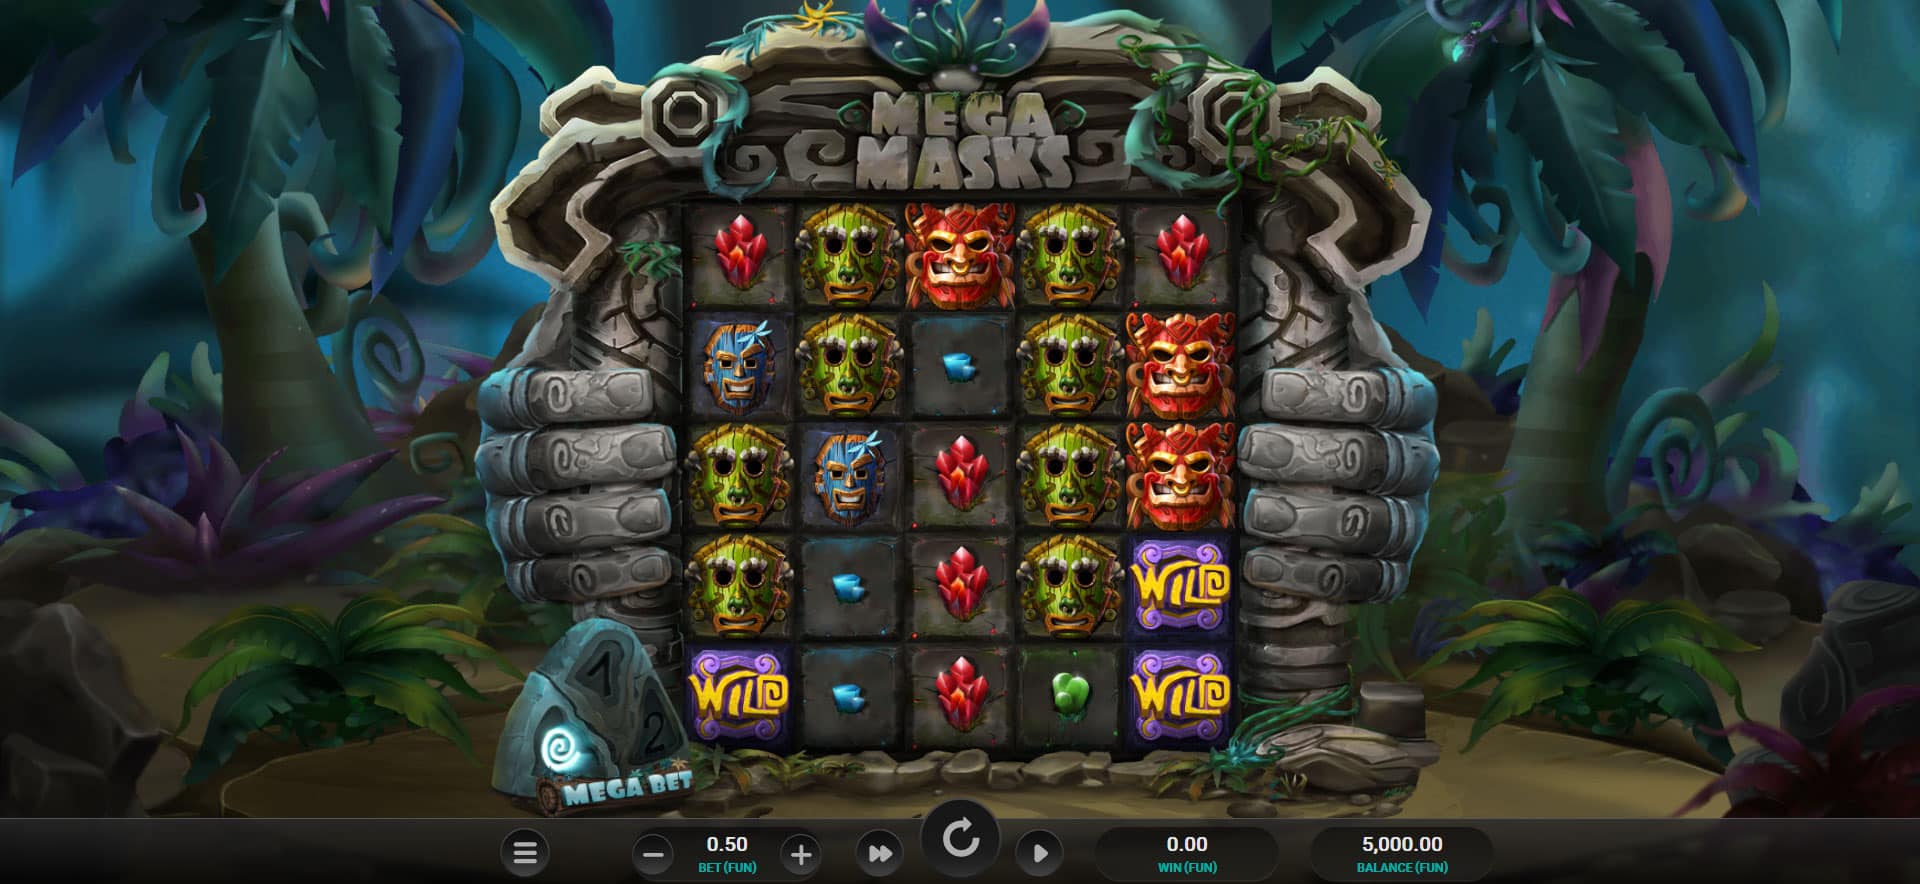 schermata del gioco slot online mega masks